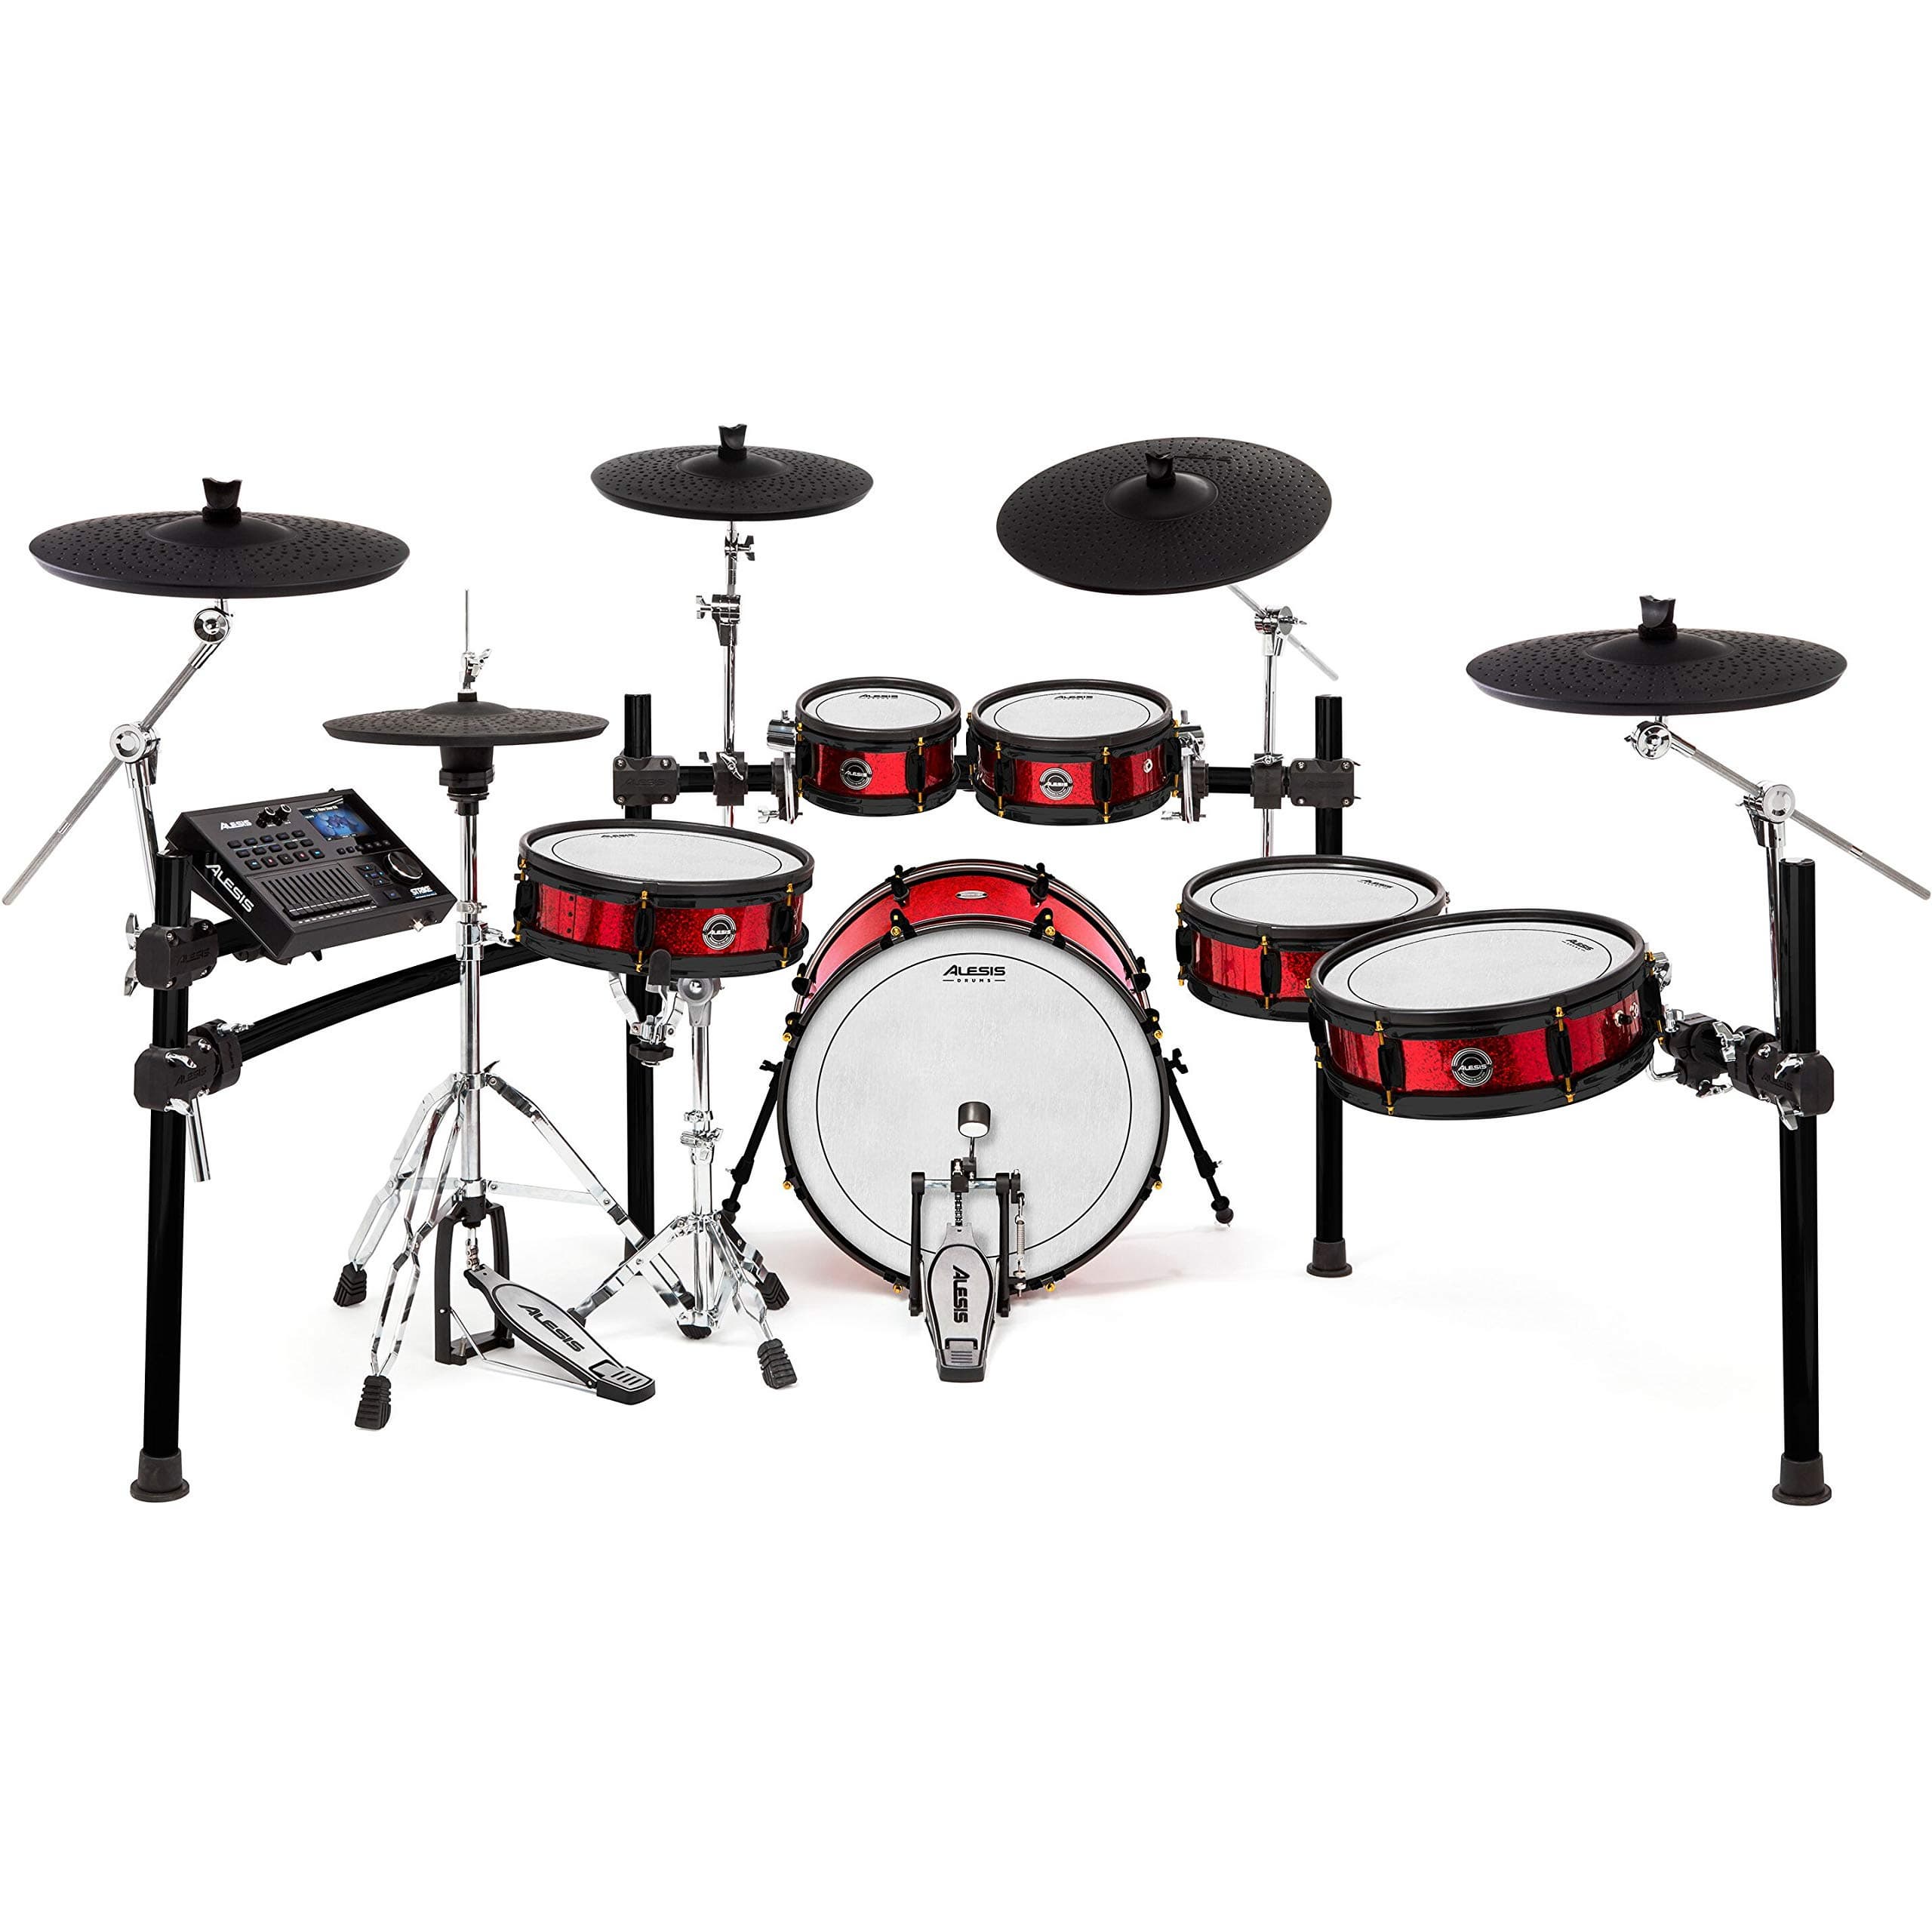 original drums for sale